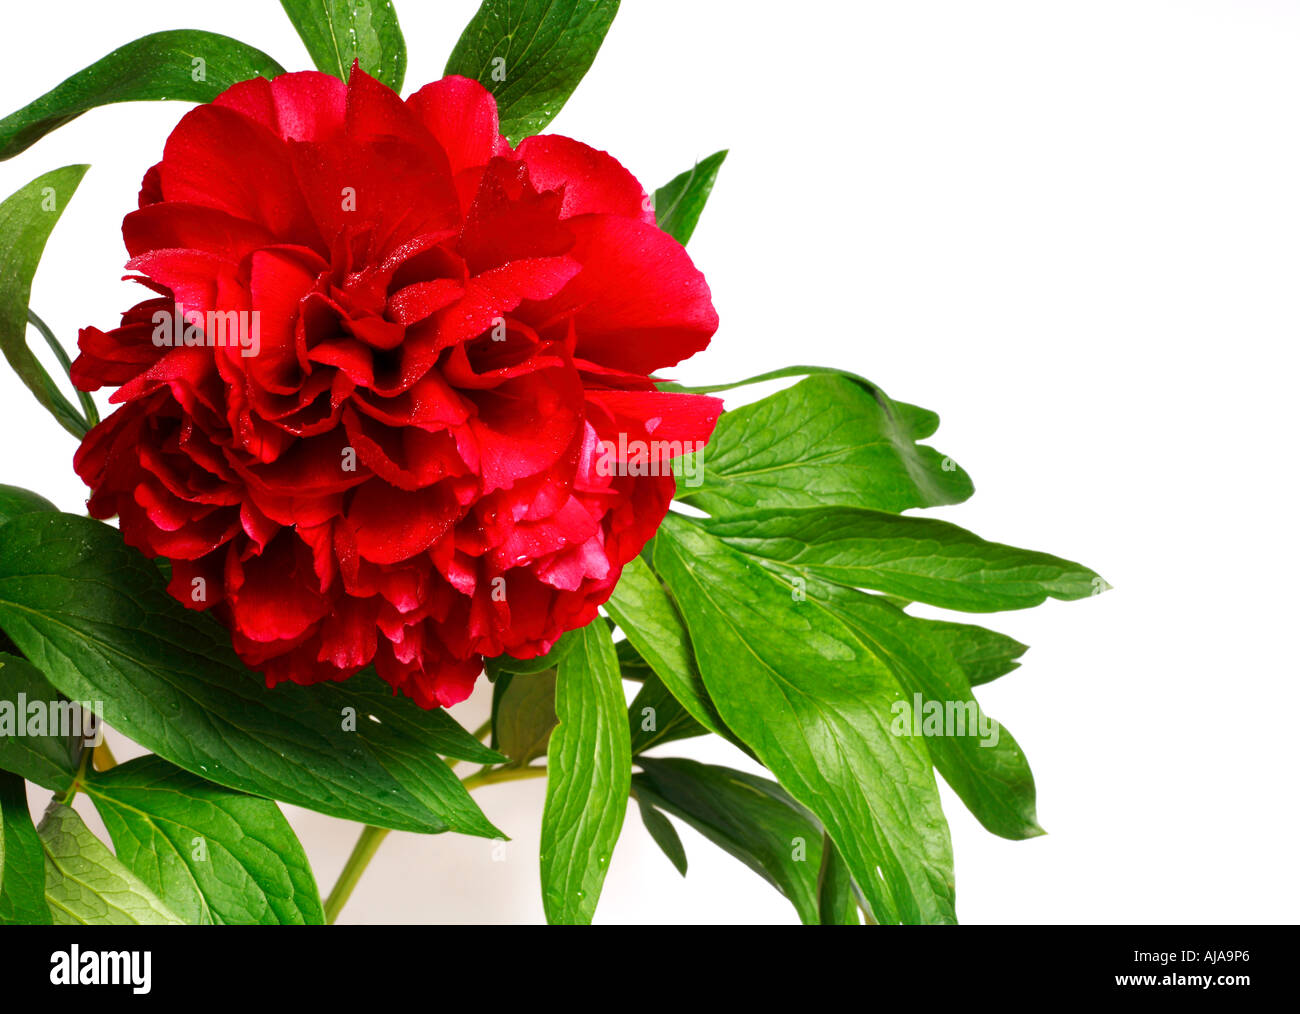 Red peony (paeonia, latin name Paeoniaceae) isolated on a white background Stock Photo